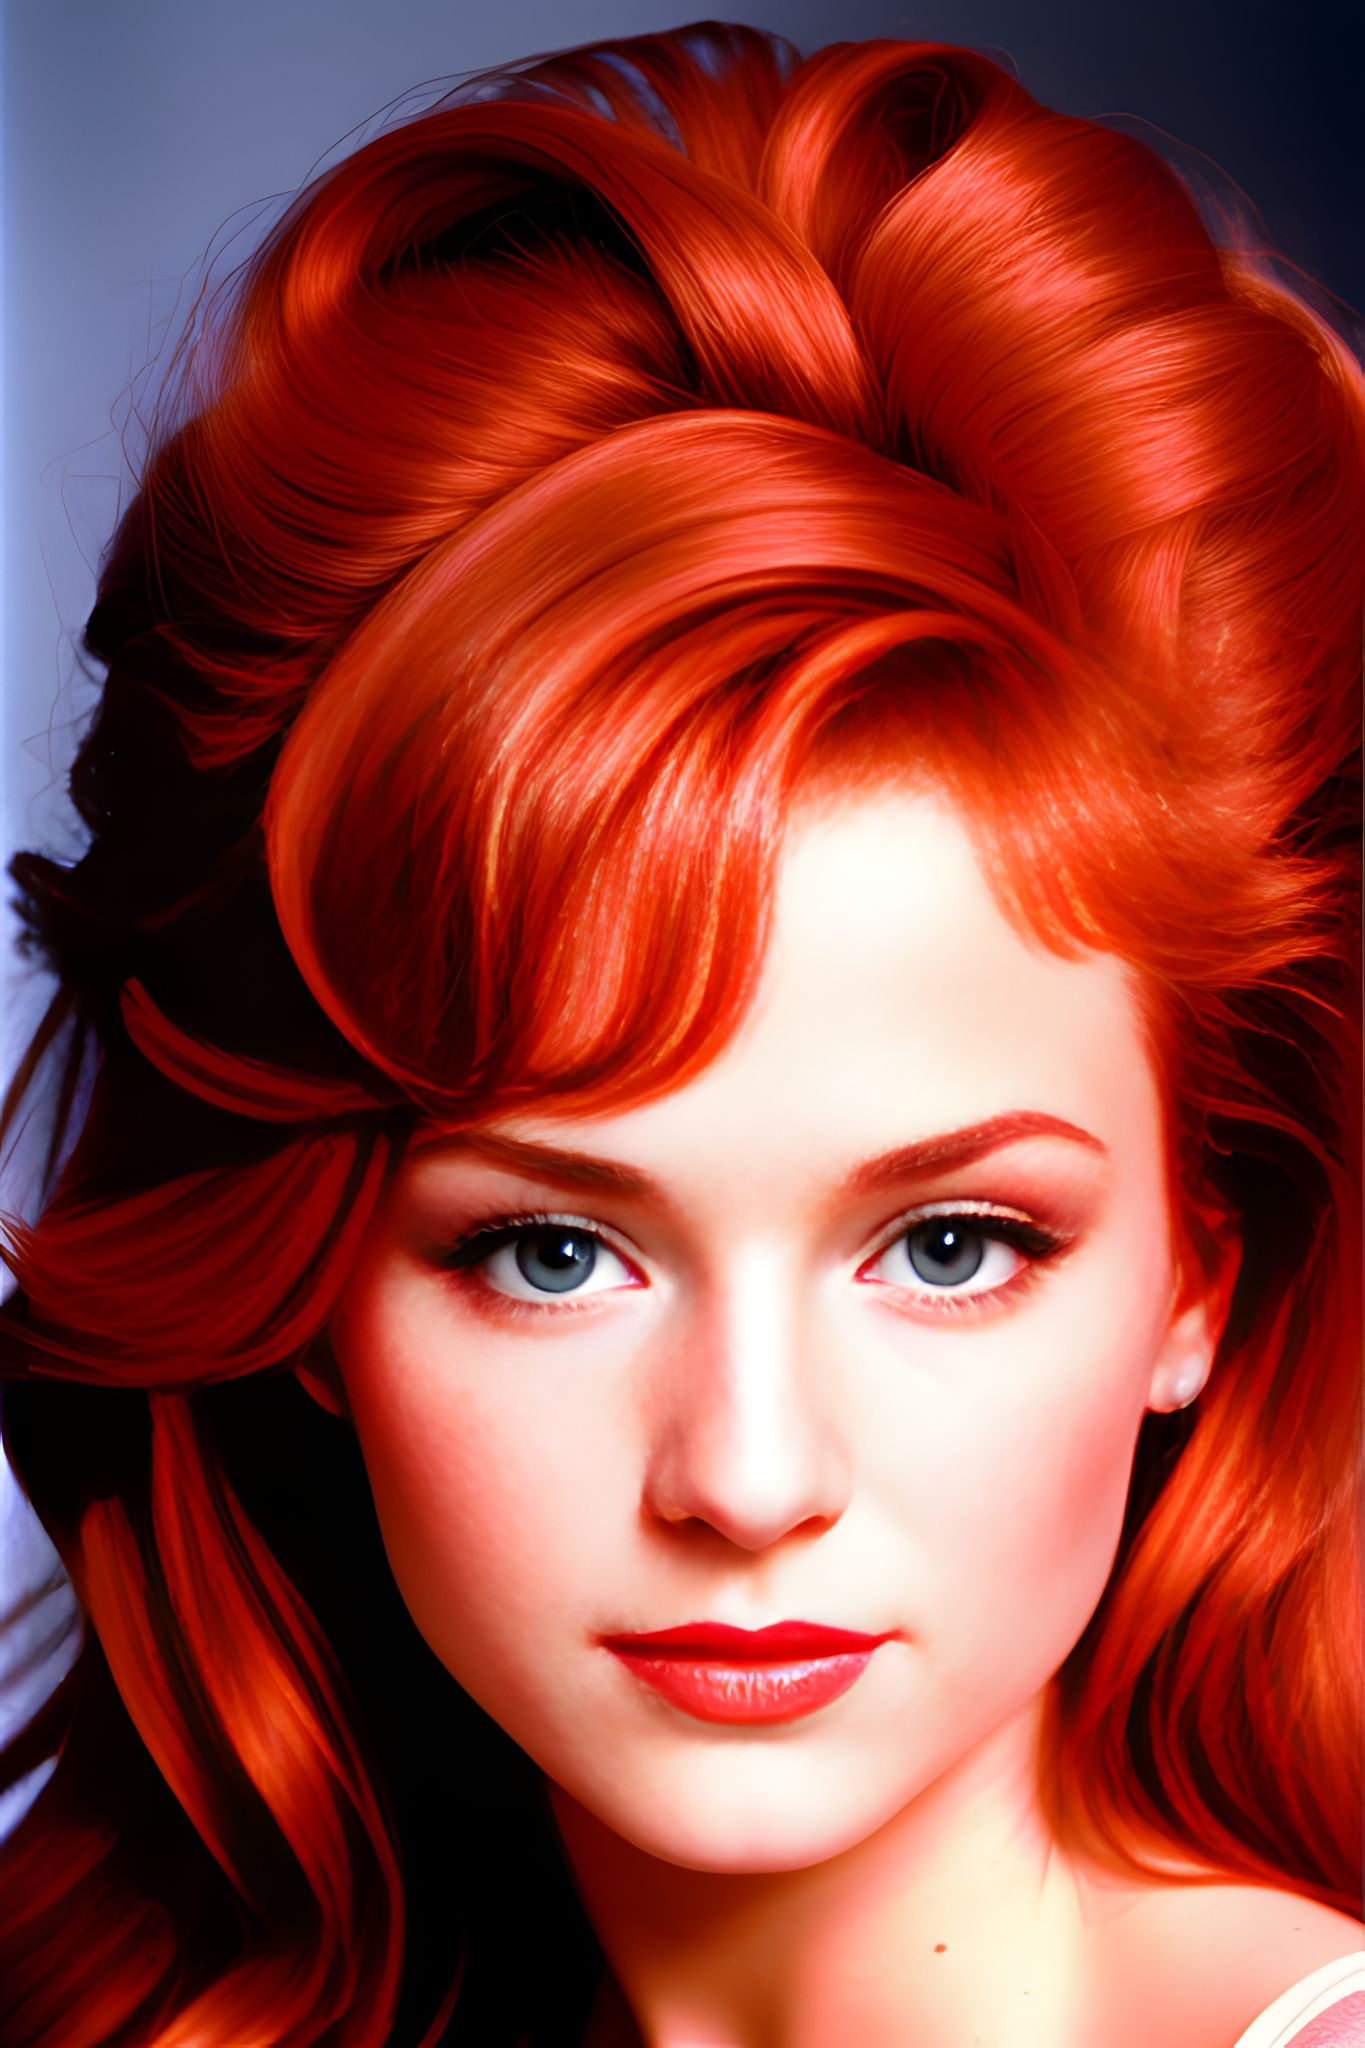 high-detail-portrait-of-a-Slavik-redhead-Actress-b6t2